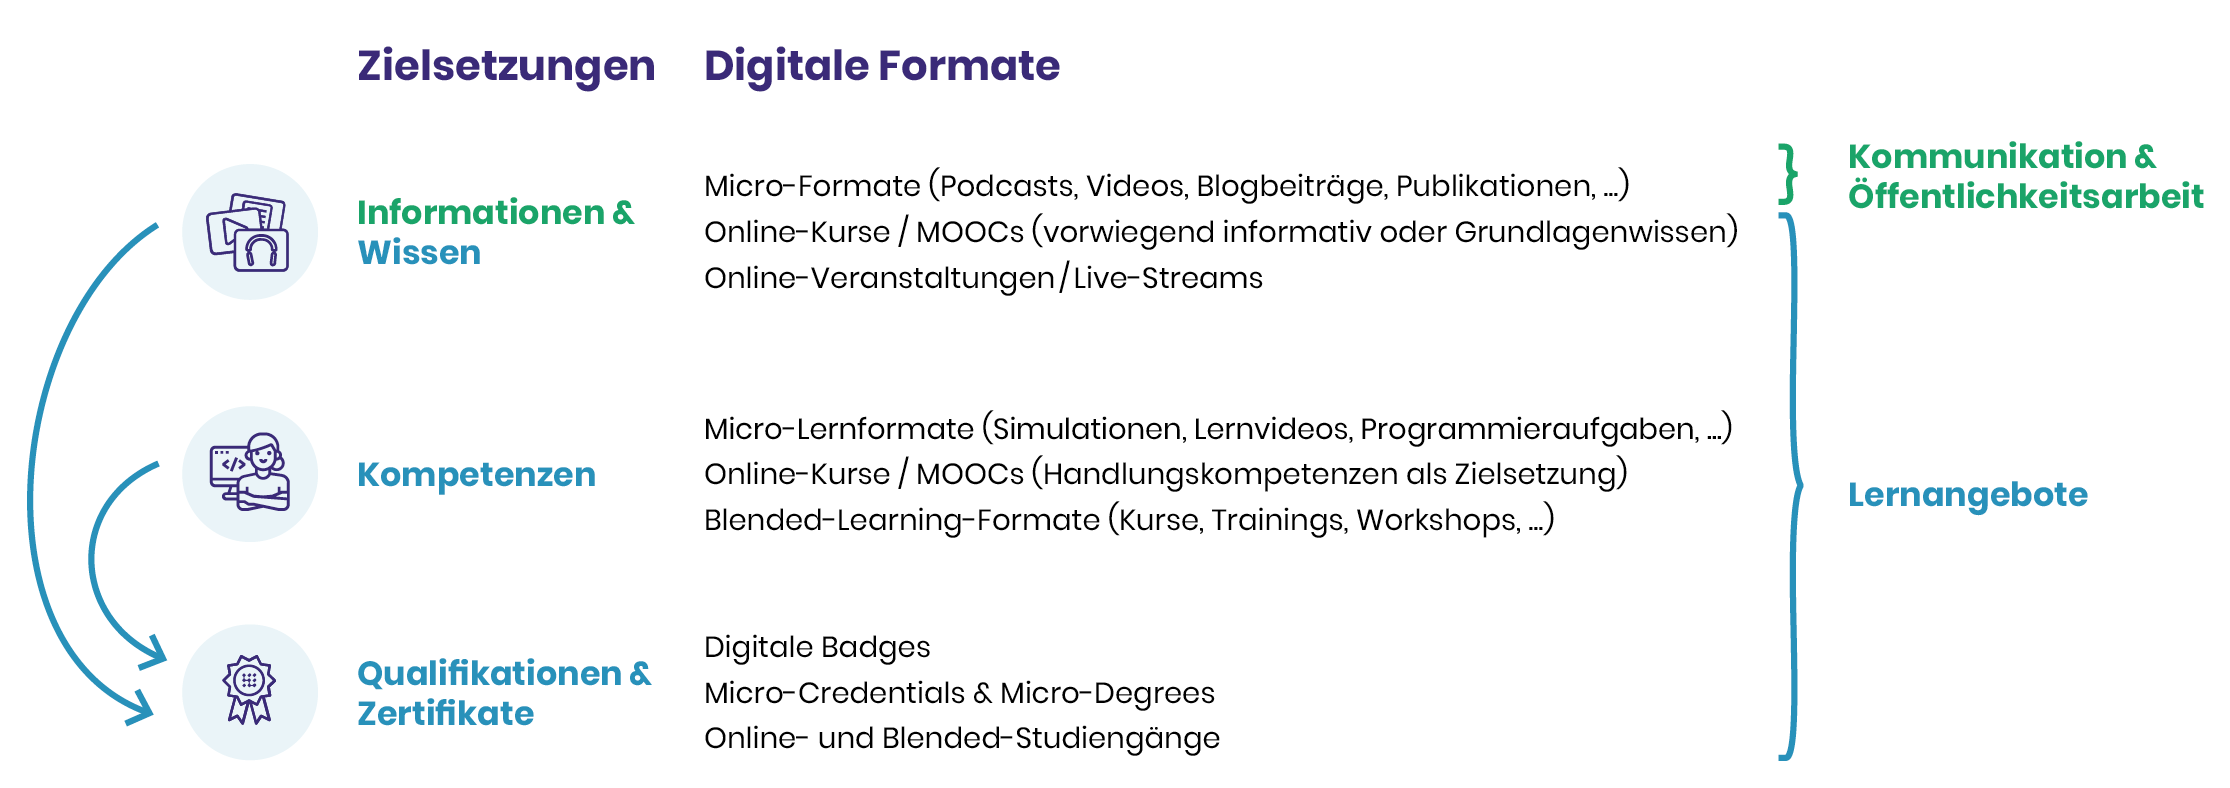 KI-Campus Digitale Formate